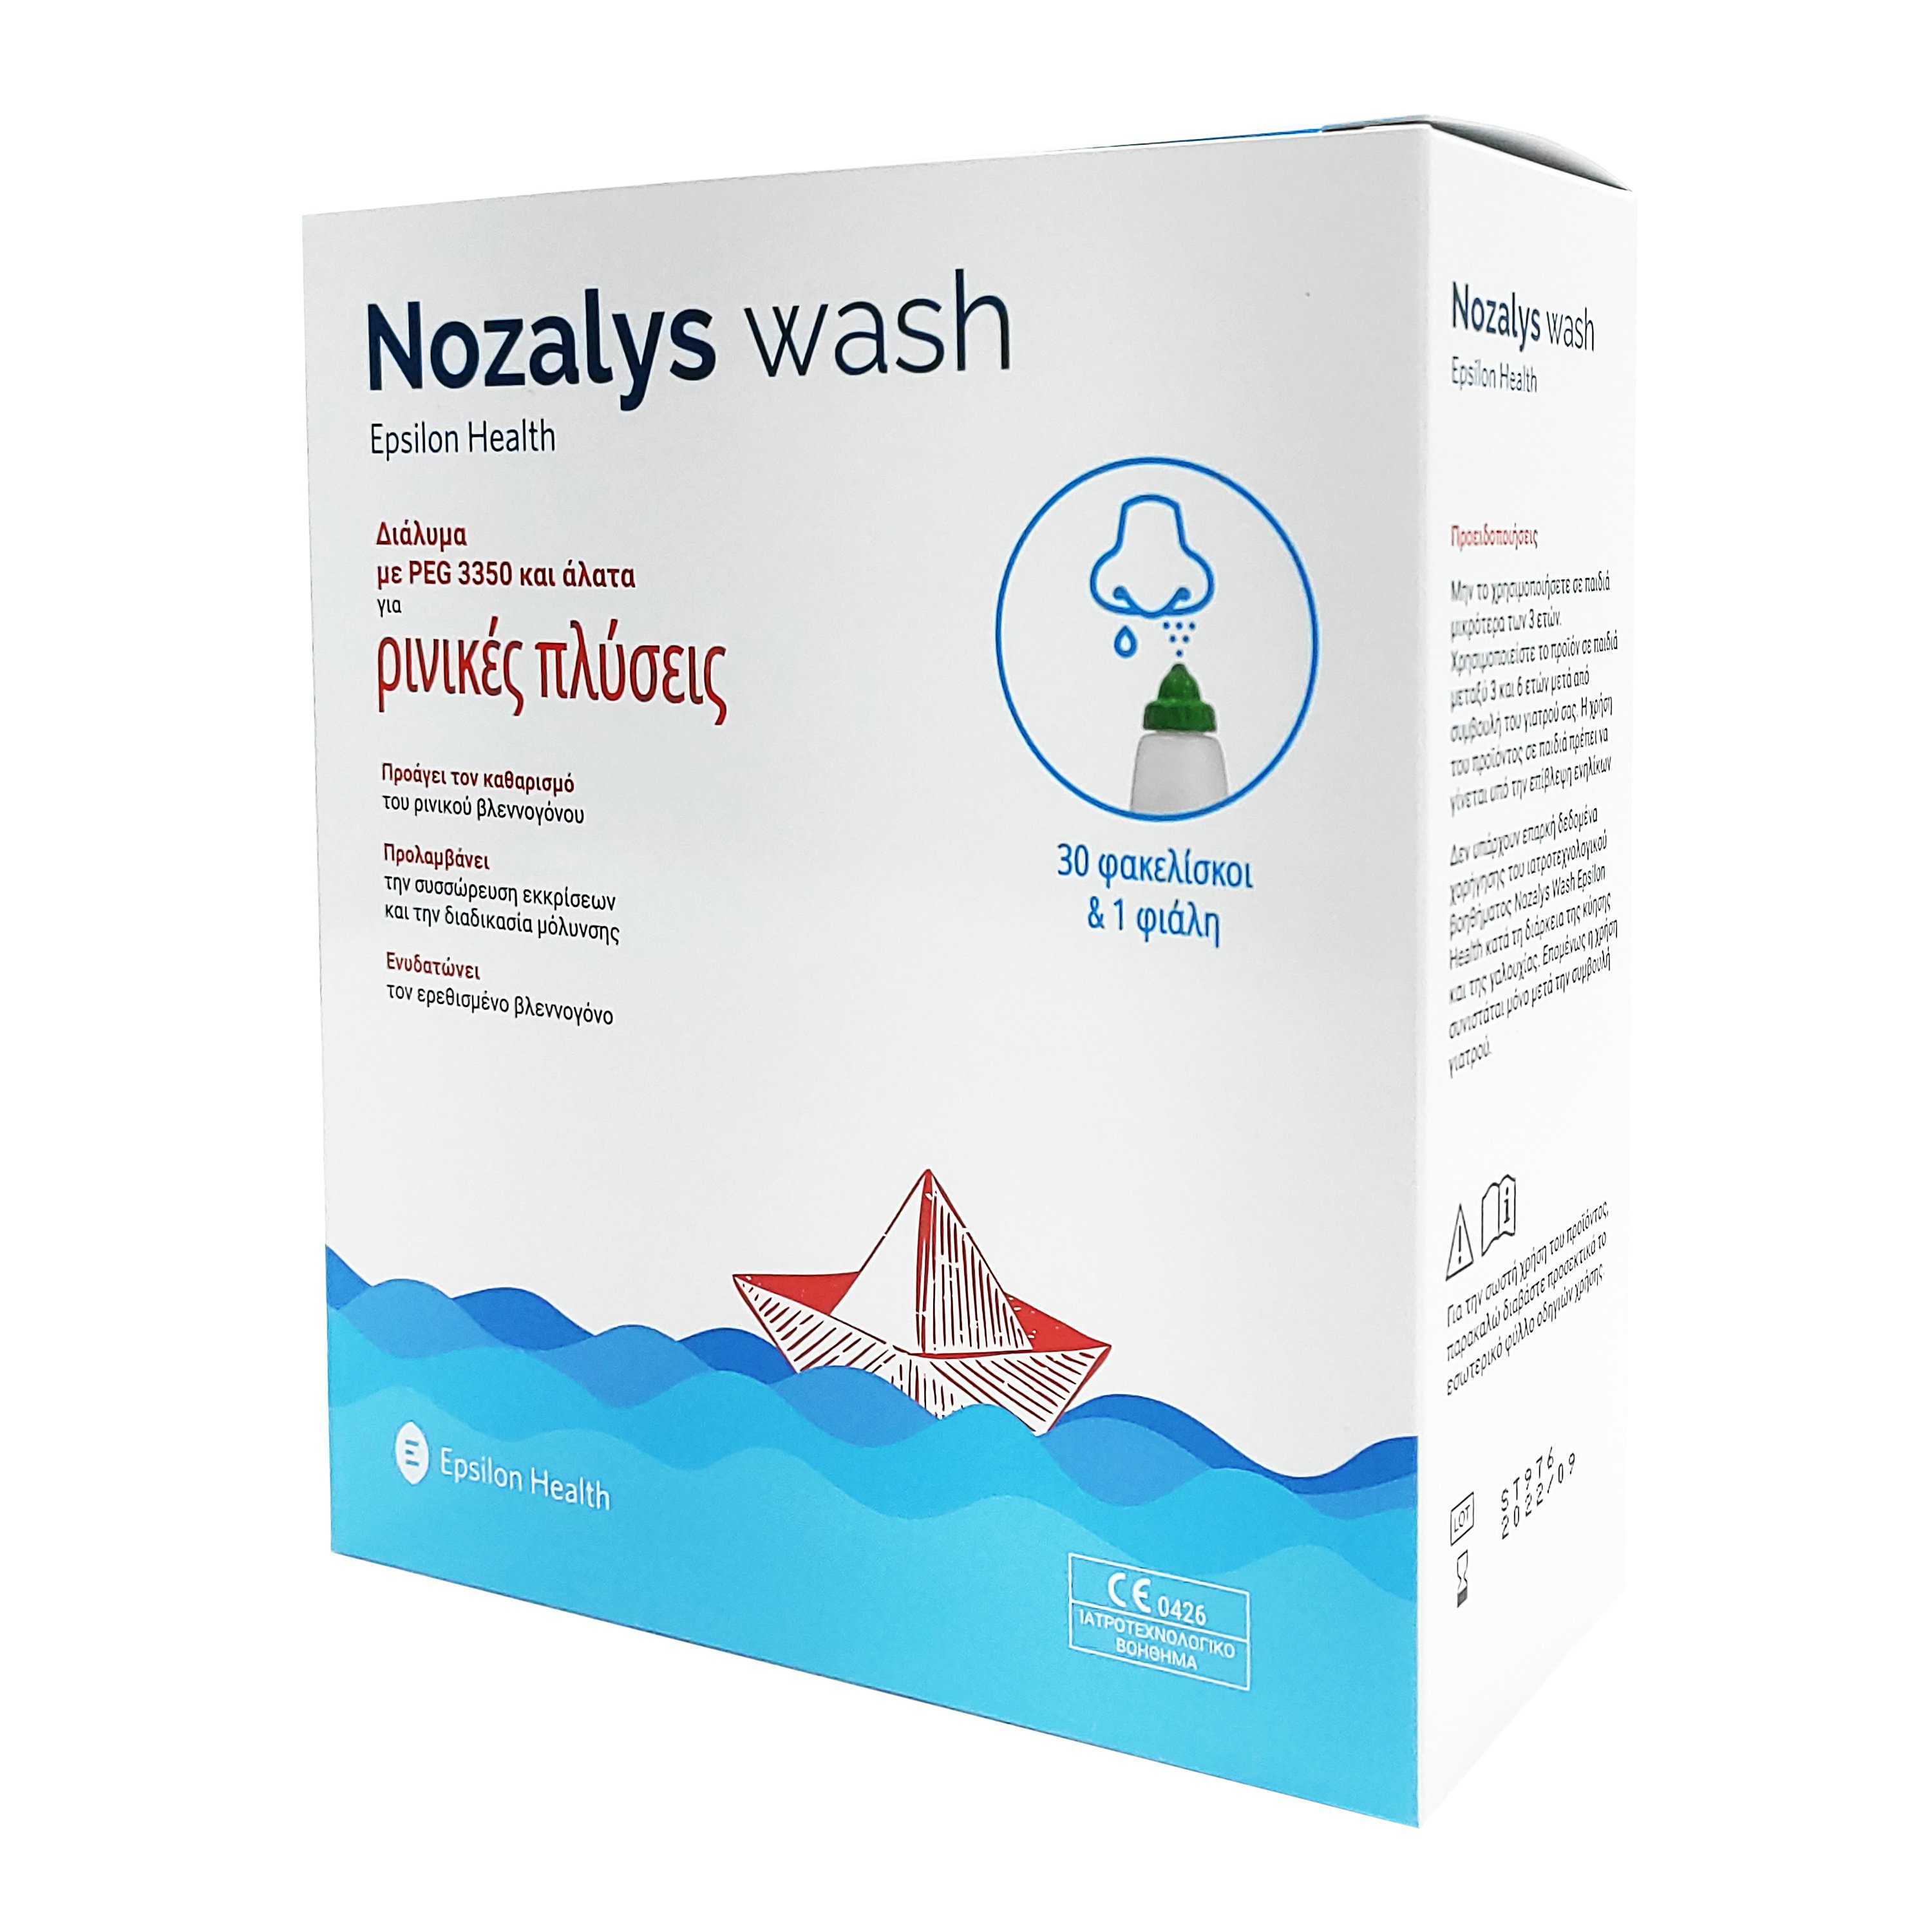 Nozalys Wash Διάλυμα για Ρινικές Πλύσεις 1 Φιάλη + 30 Φακελίσκοι 38398